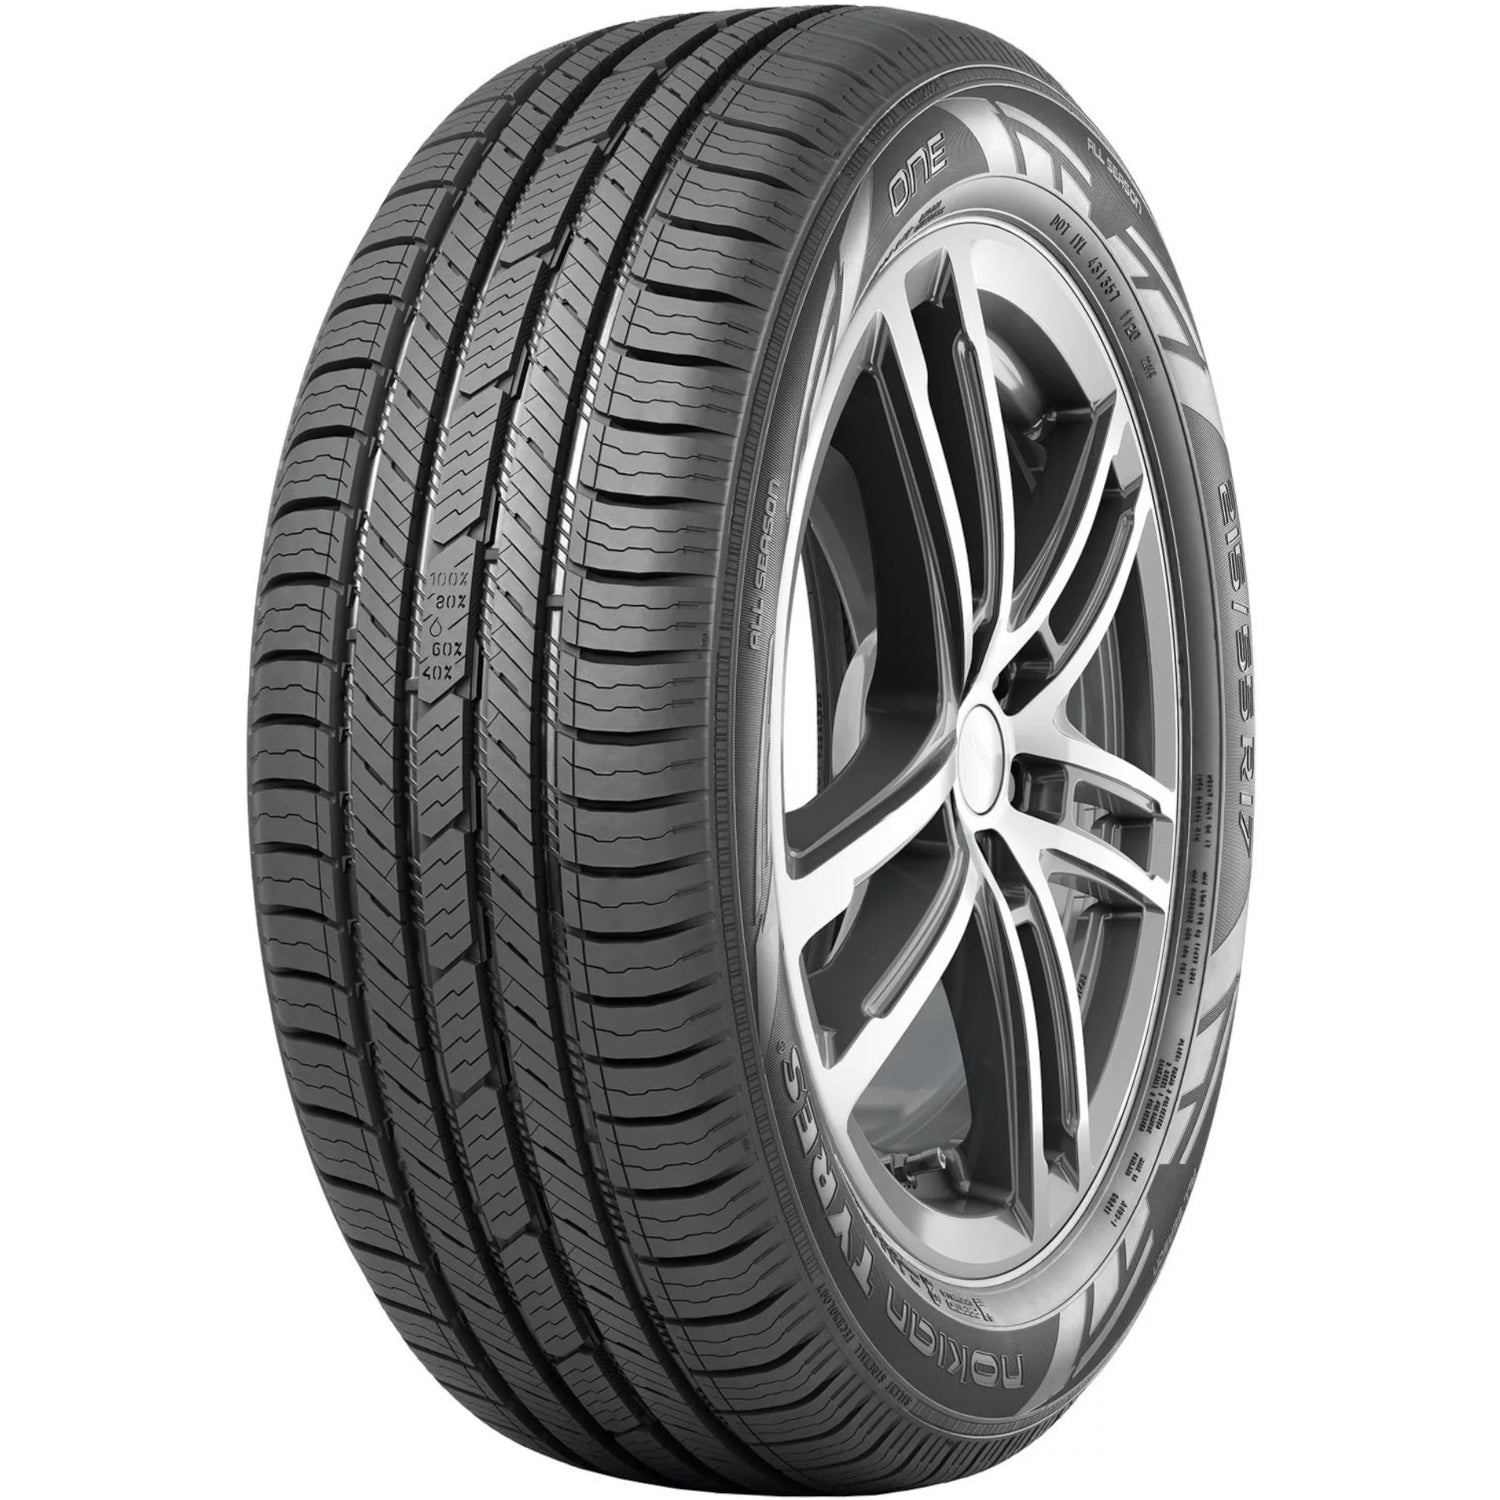 NOKIAN ONE 235/55R17 (27.2X9.3R 17) Tires